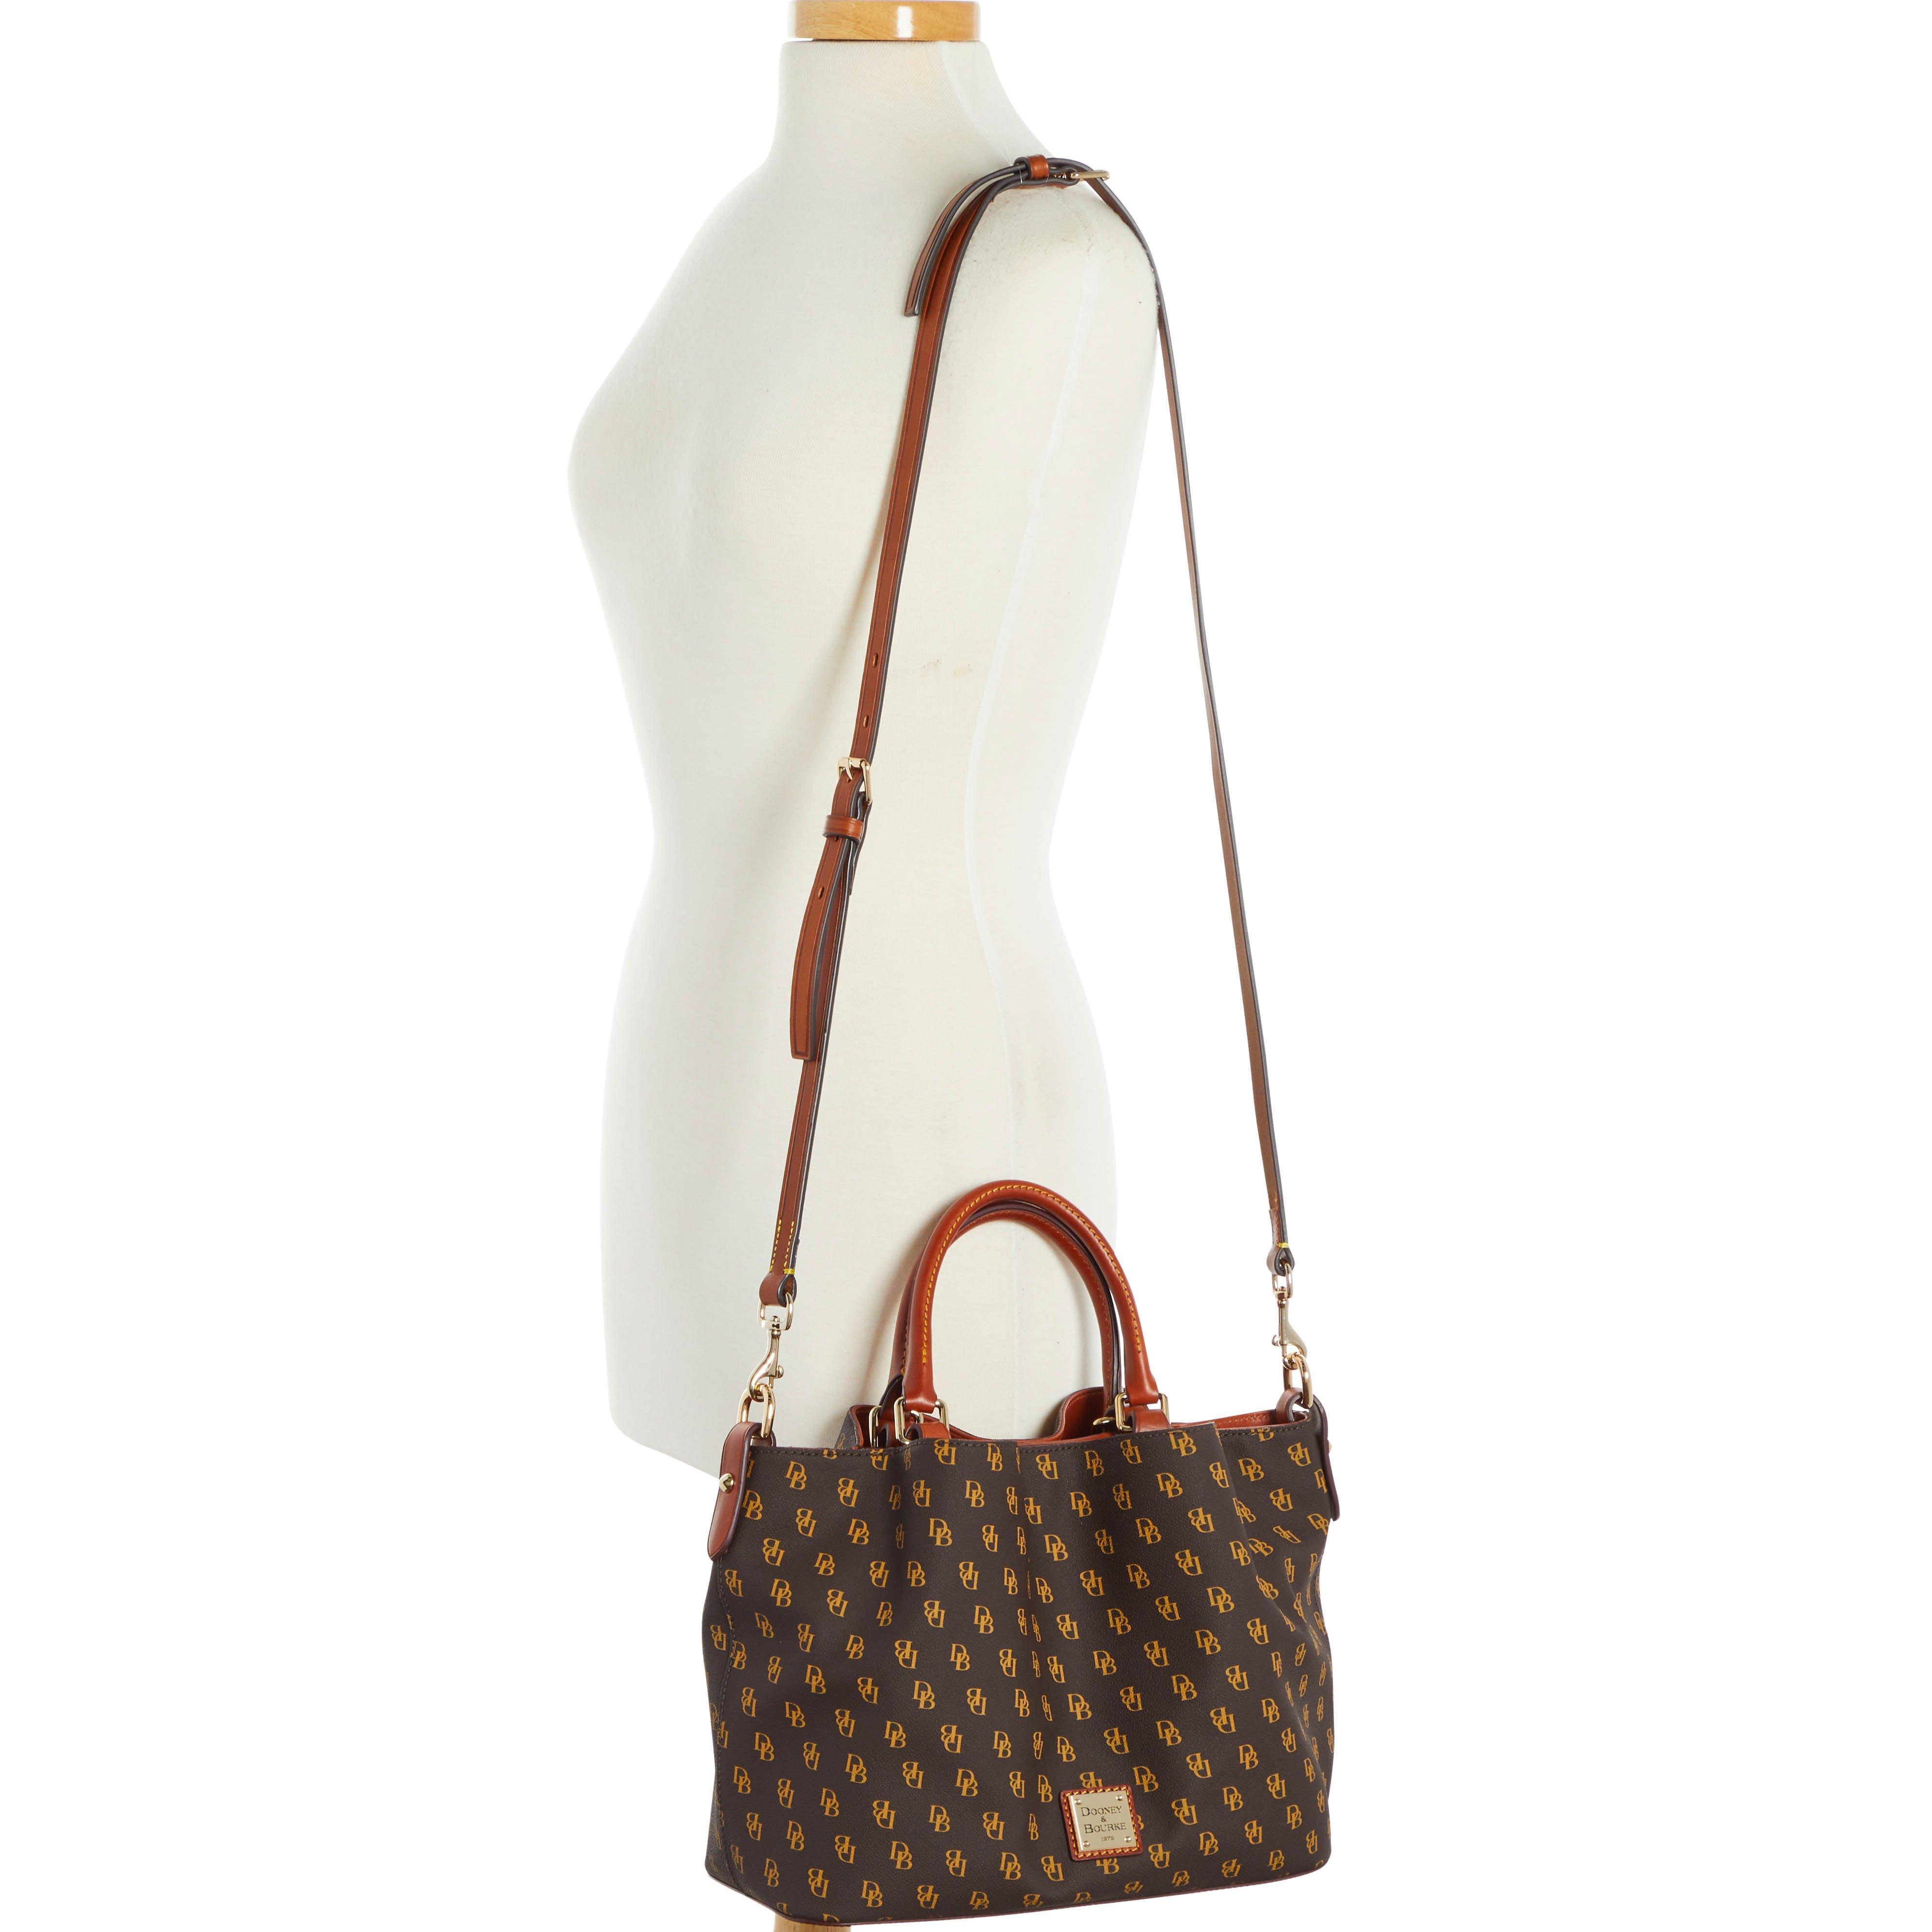 NWT DOONEY & BOURKE Gretta Brenna Handbag & Large Framed Purse BROWN